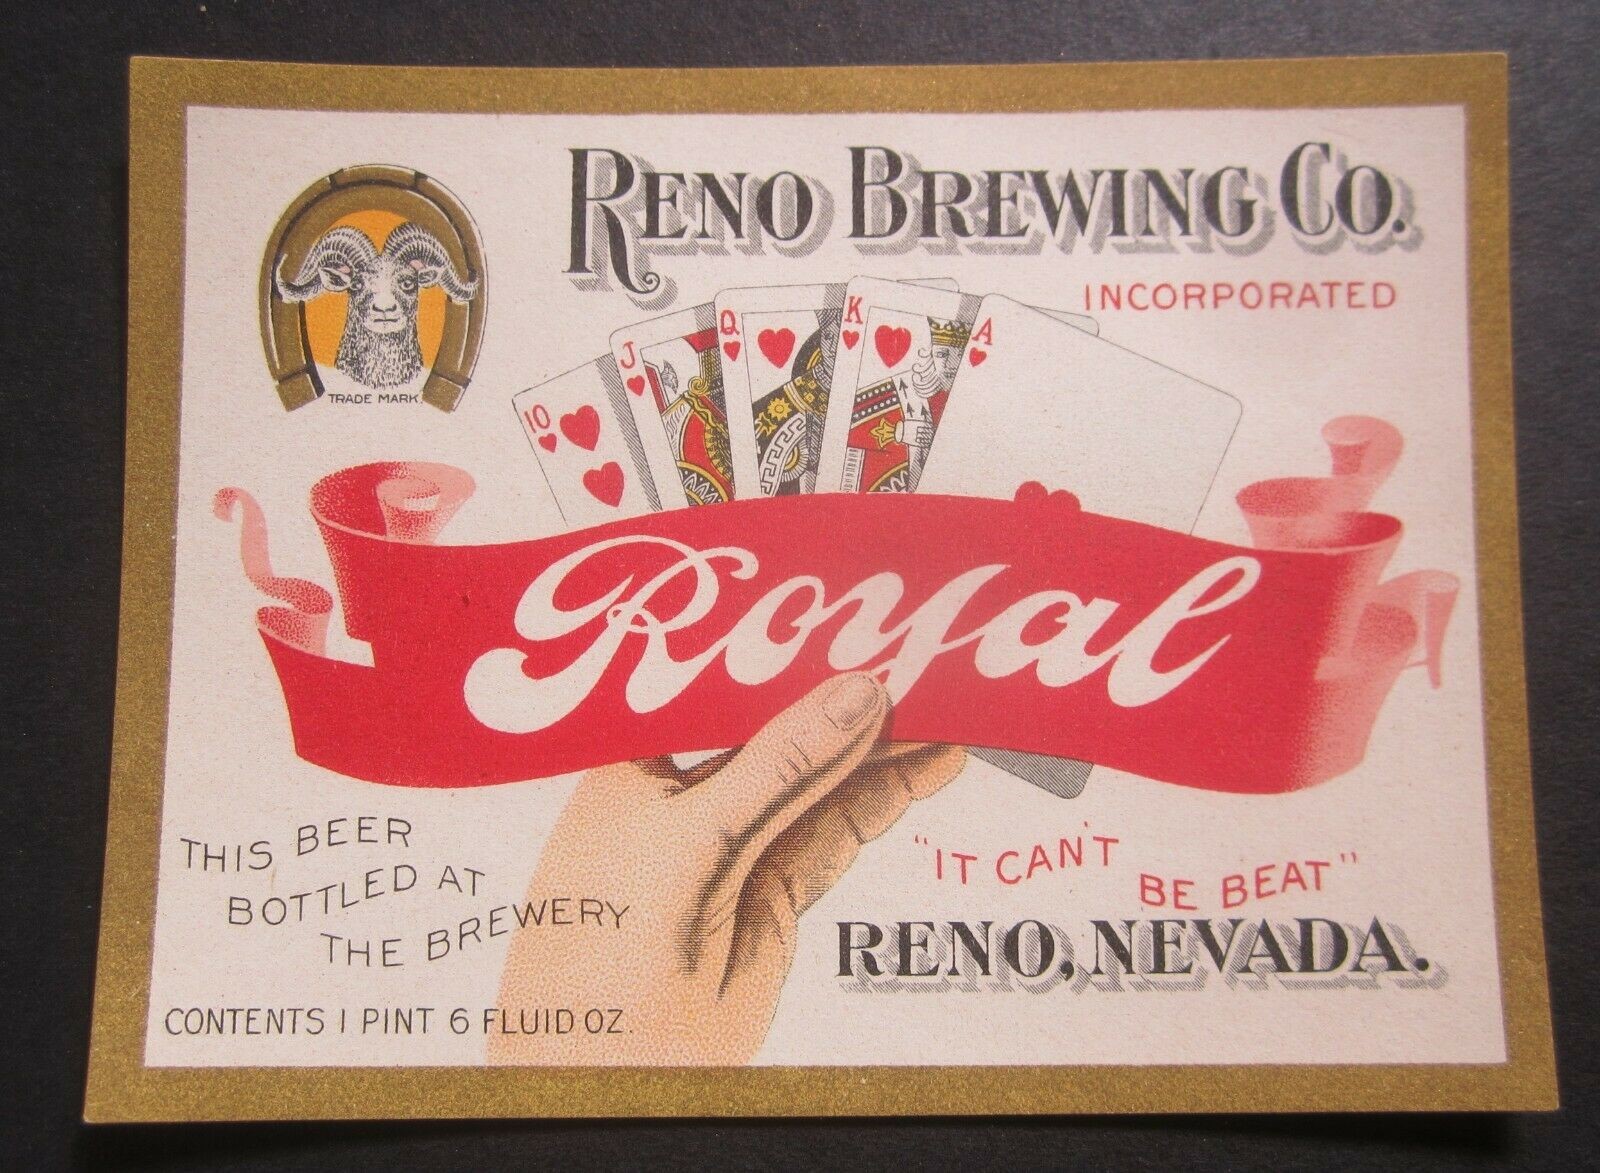  Old Vintage - ROYAL Beer LABEL - Reno Brewing ...